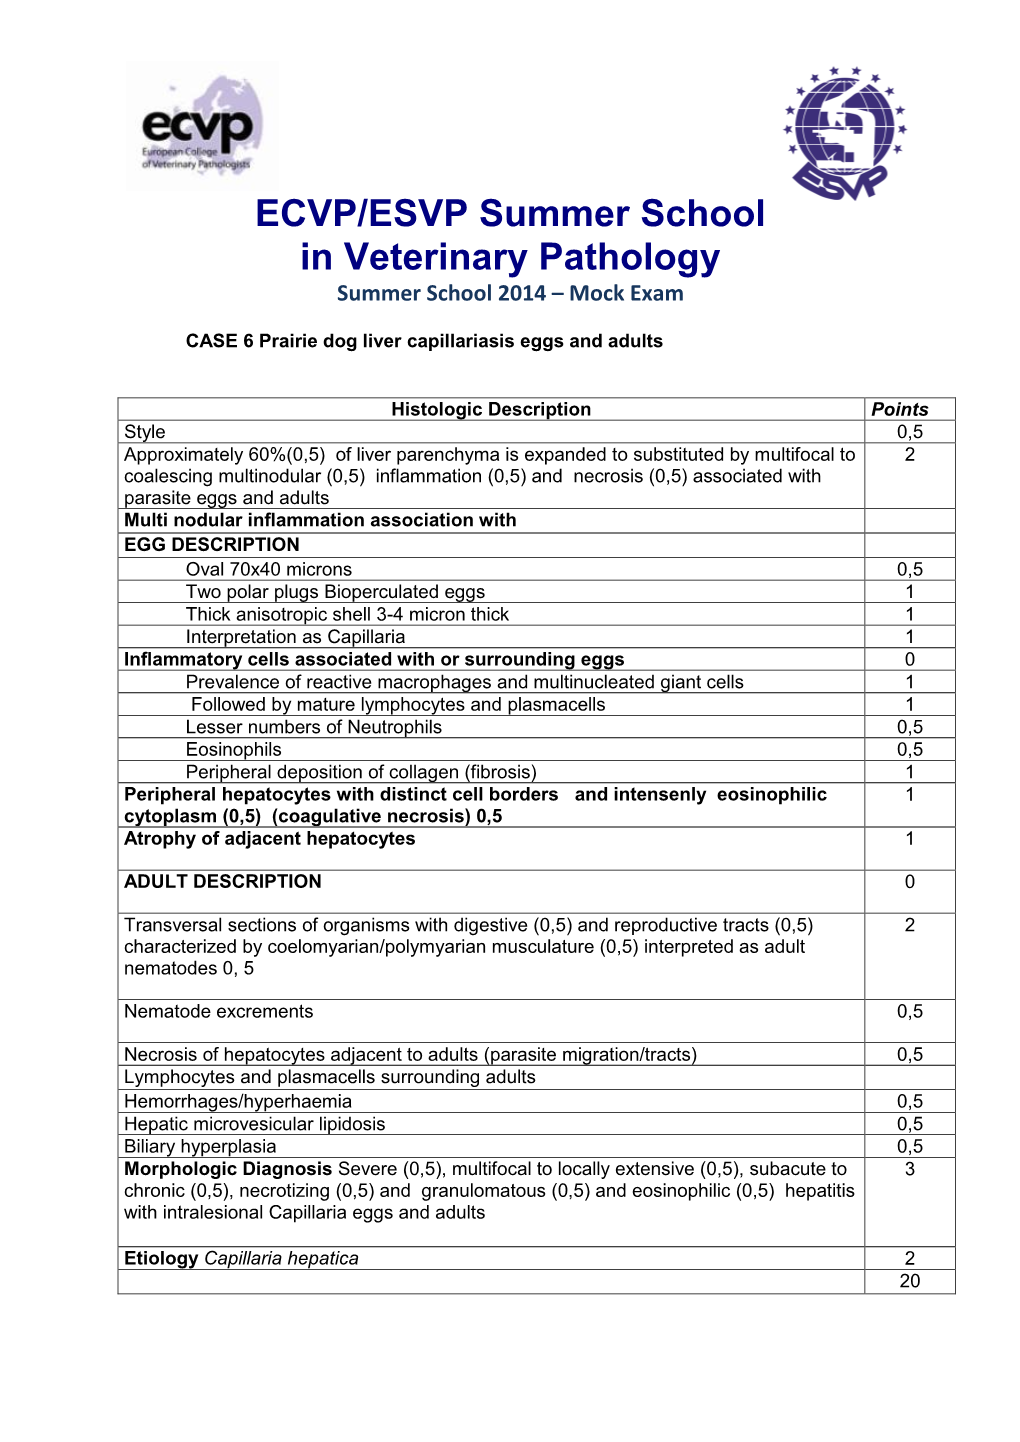 ECVP/ESVP Summer School in Veterinary Pathology Summer School 2014 – Mock Exam